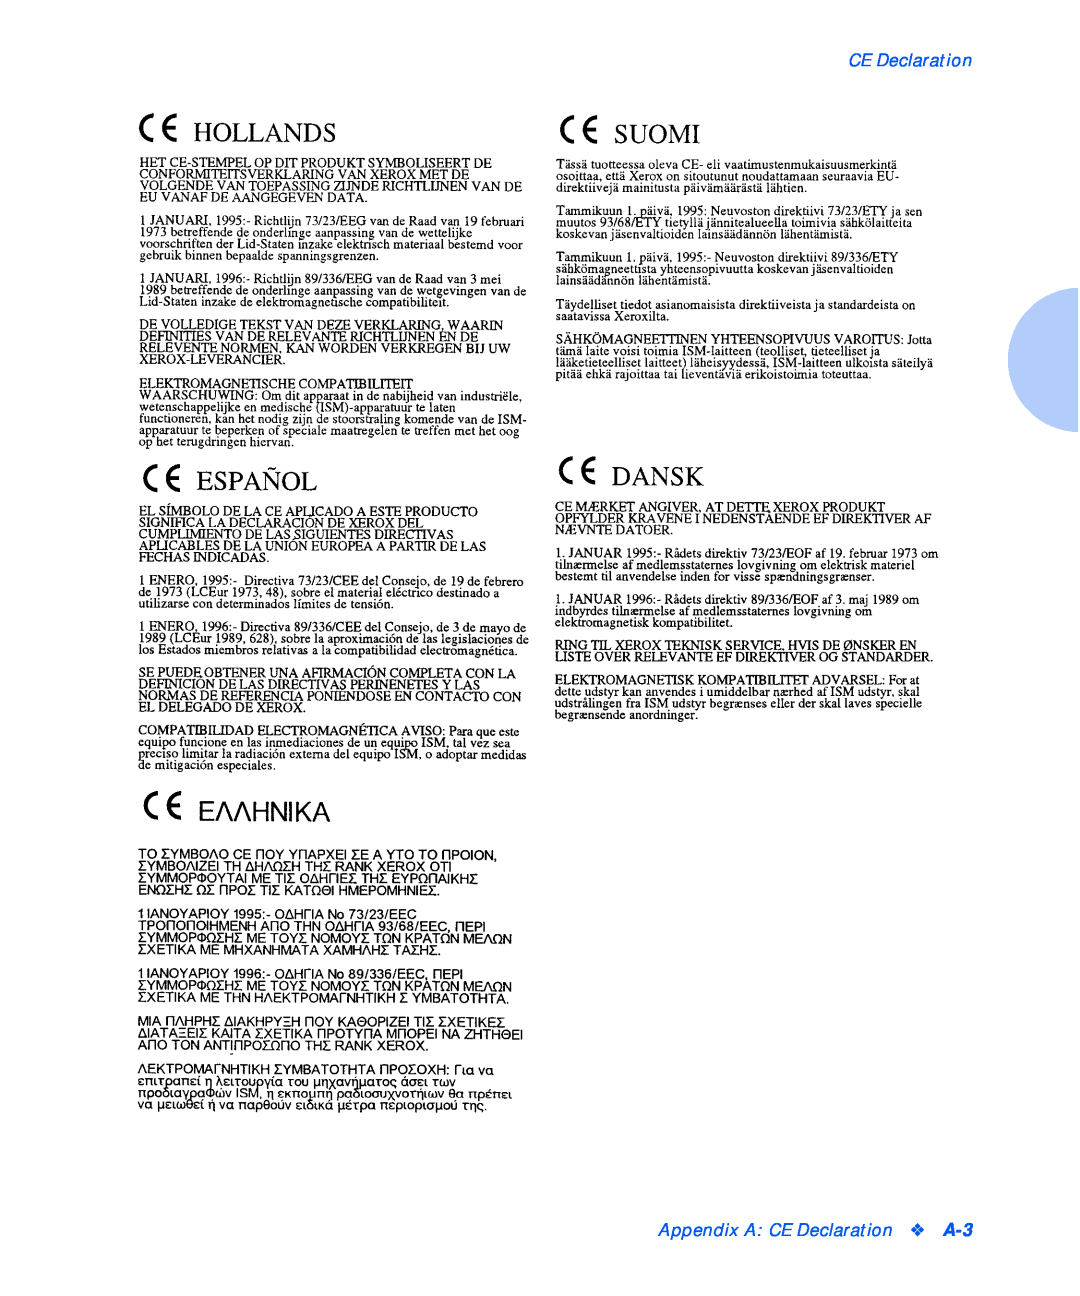 Xerox N17b manual Appendix A CE Declaration A-3 